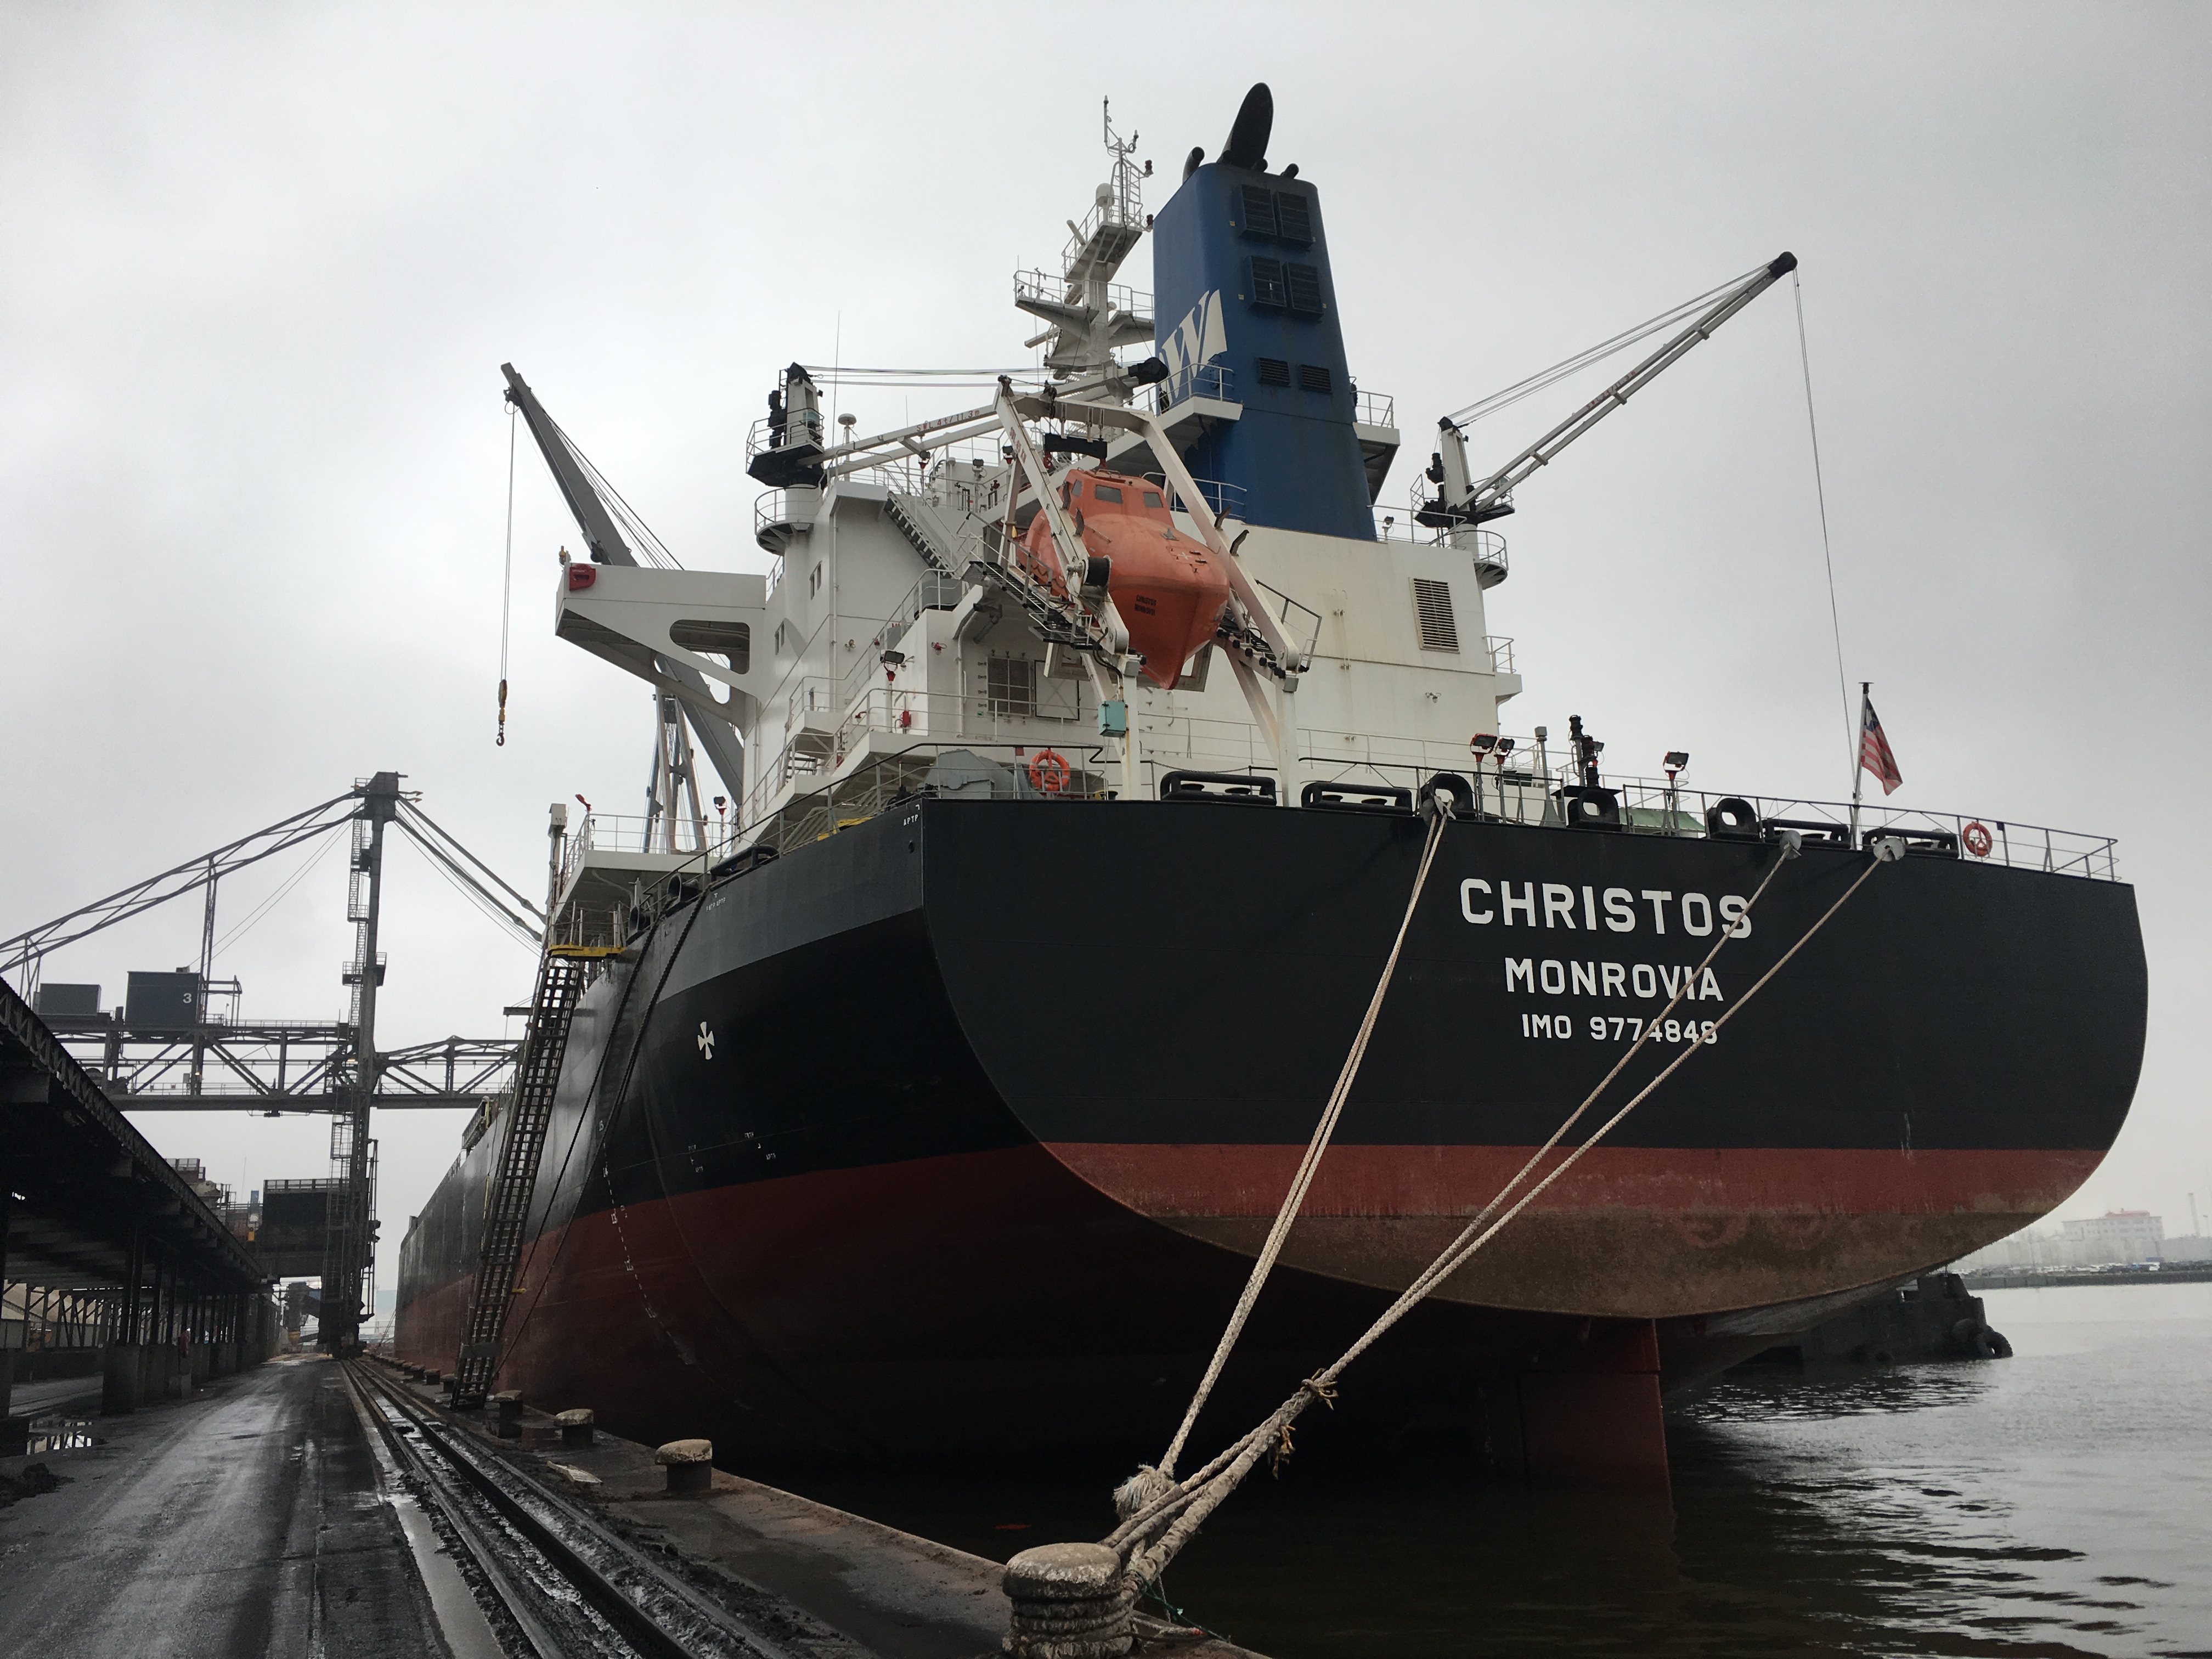 MV Christos - Crown 63 Ultramax built in 2016 by Sinopacific Dayang